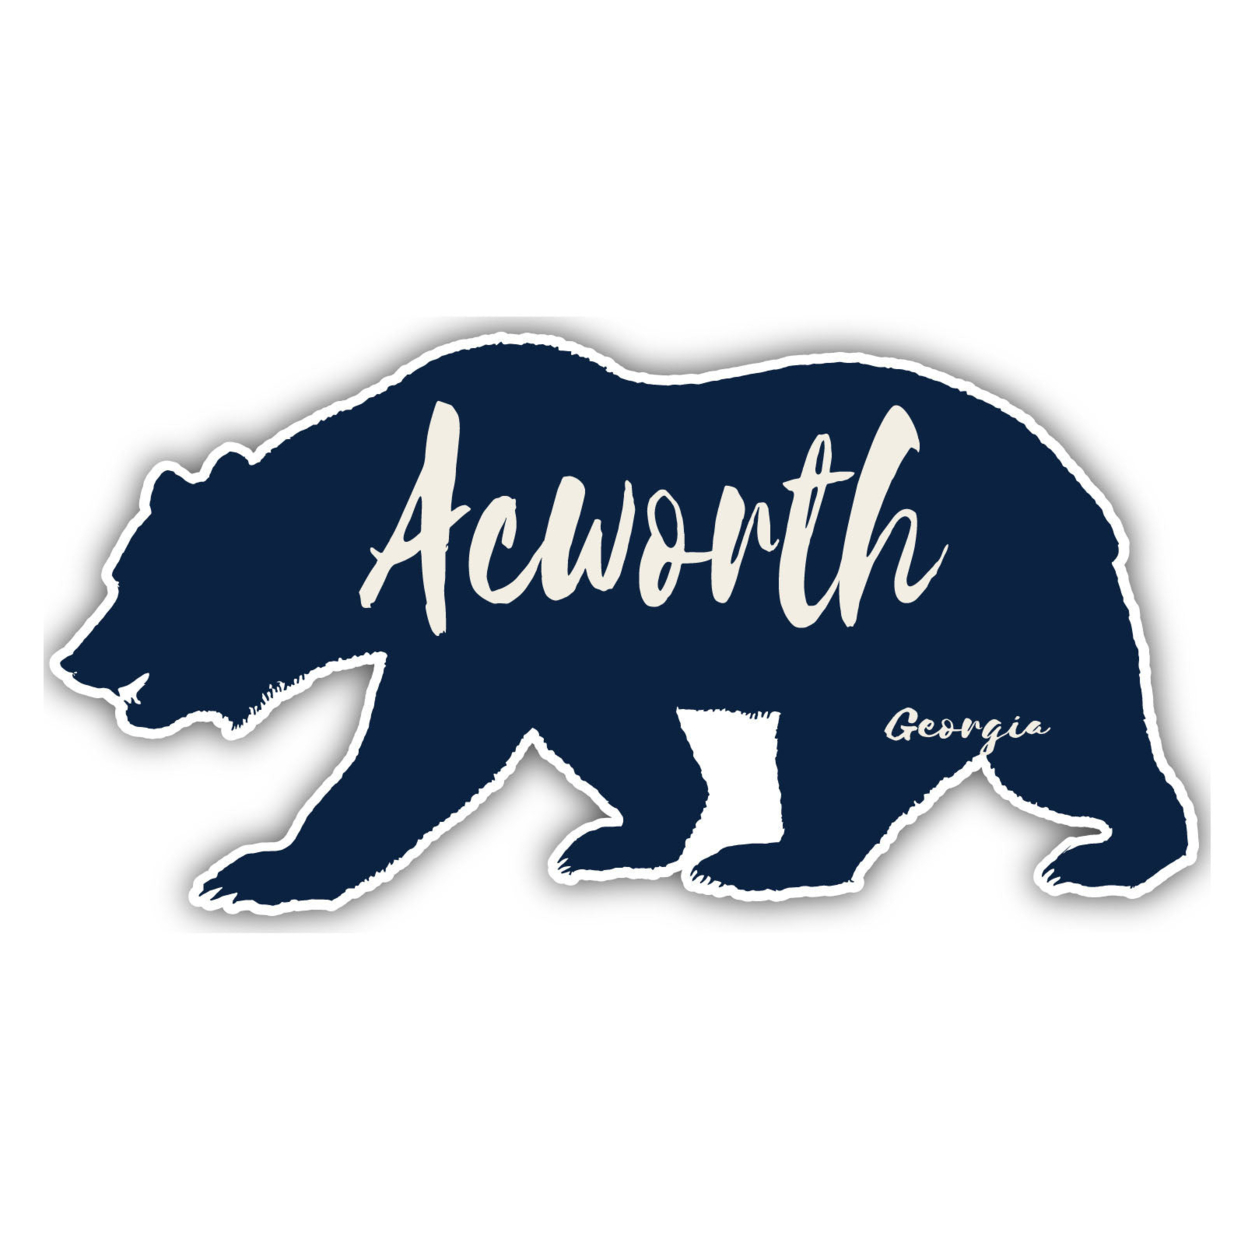 Acworth Georgia Souvenir Decorative Stickers (Choose Theme And Size) - 4-Pack, 10-Inch, Bear